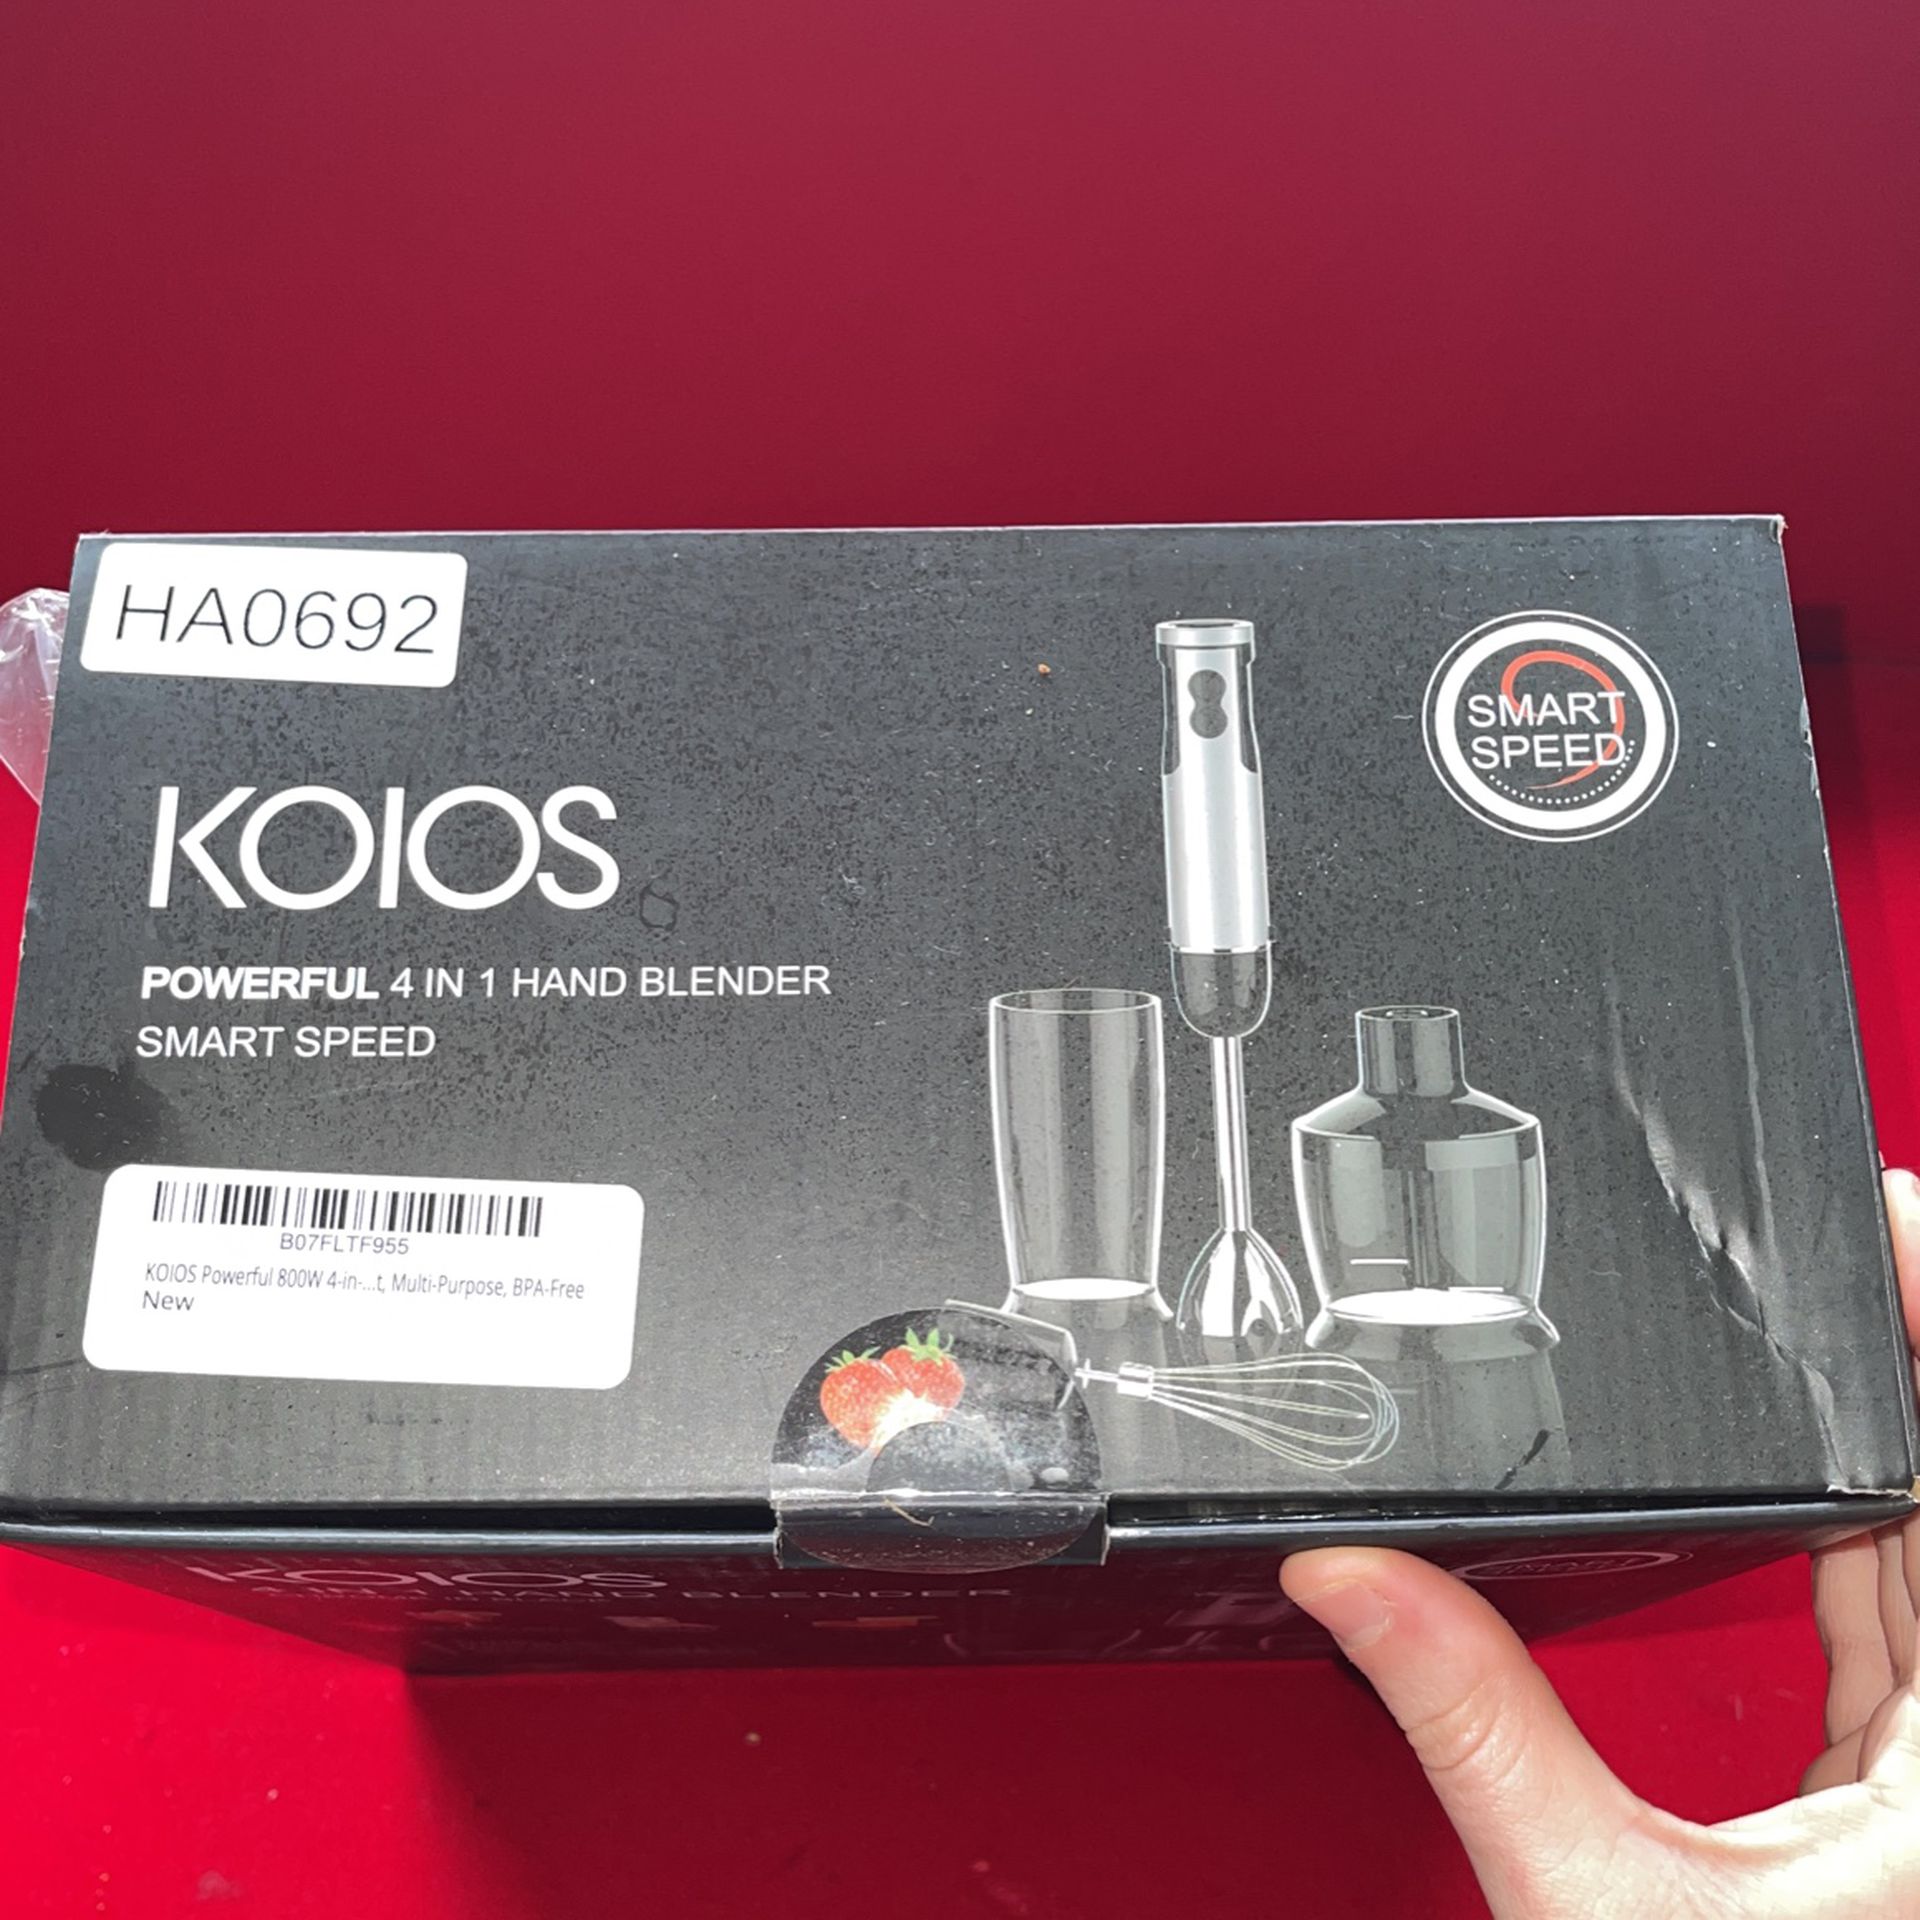 Koios 4 In 1 Hand blender for Sale in Berkeley, CA - OfferUp